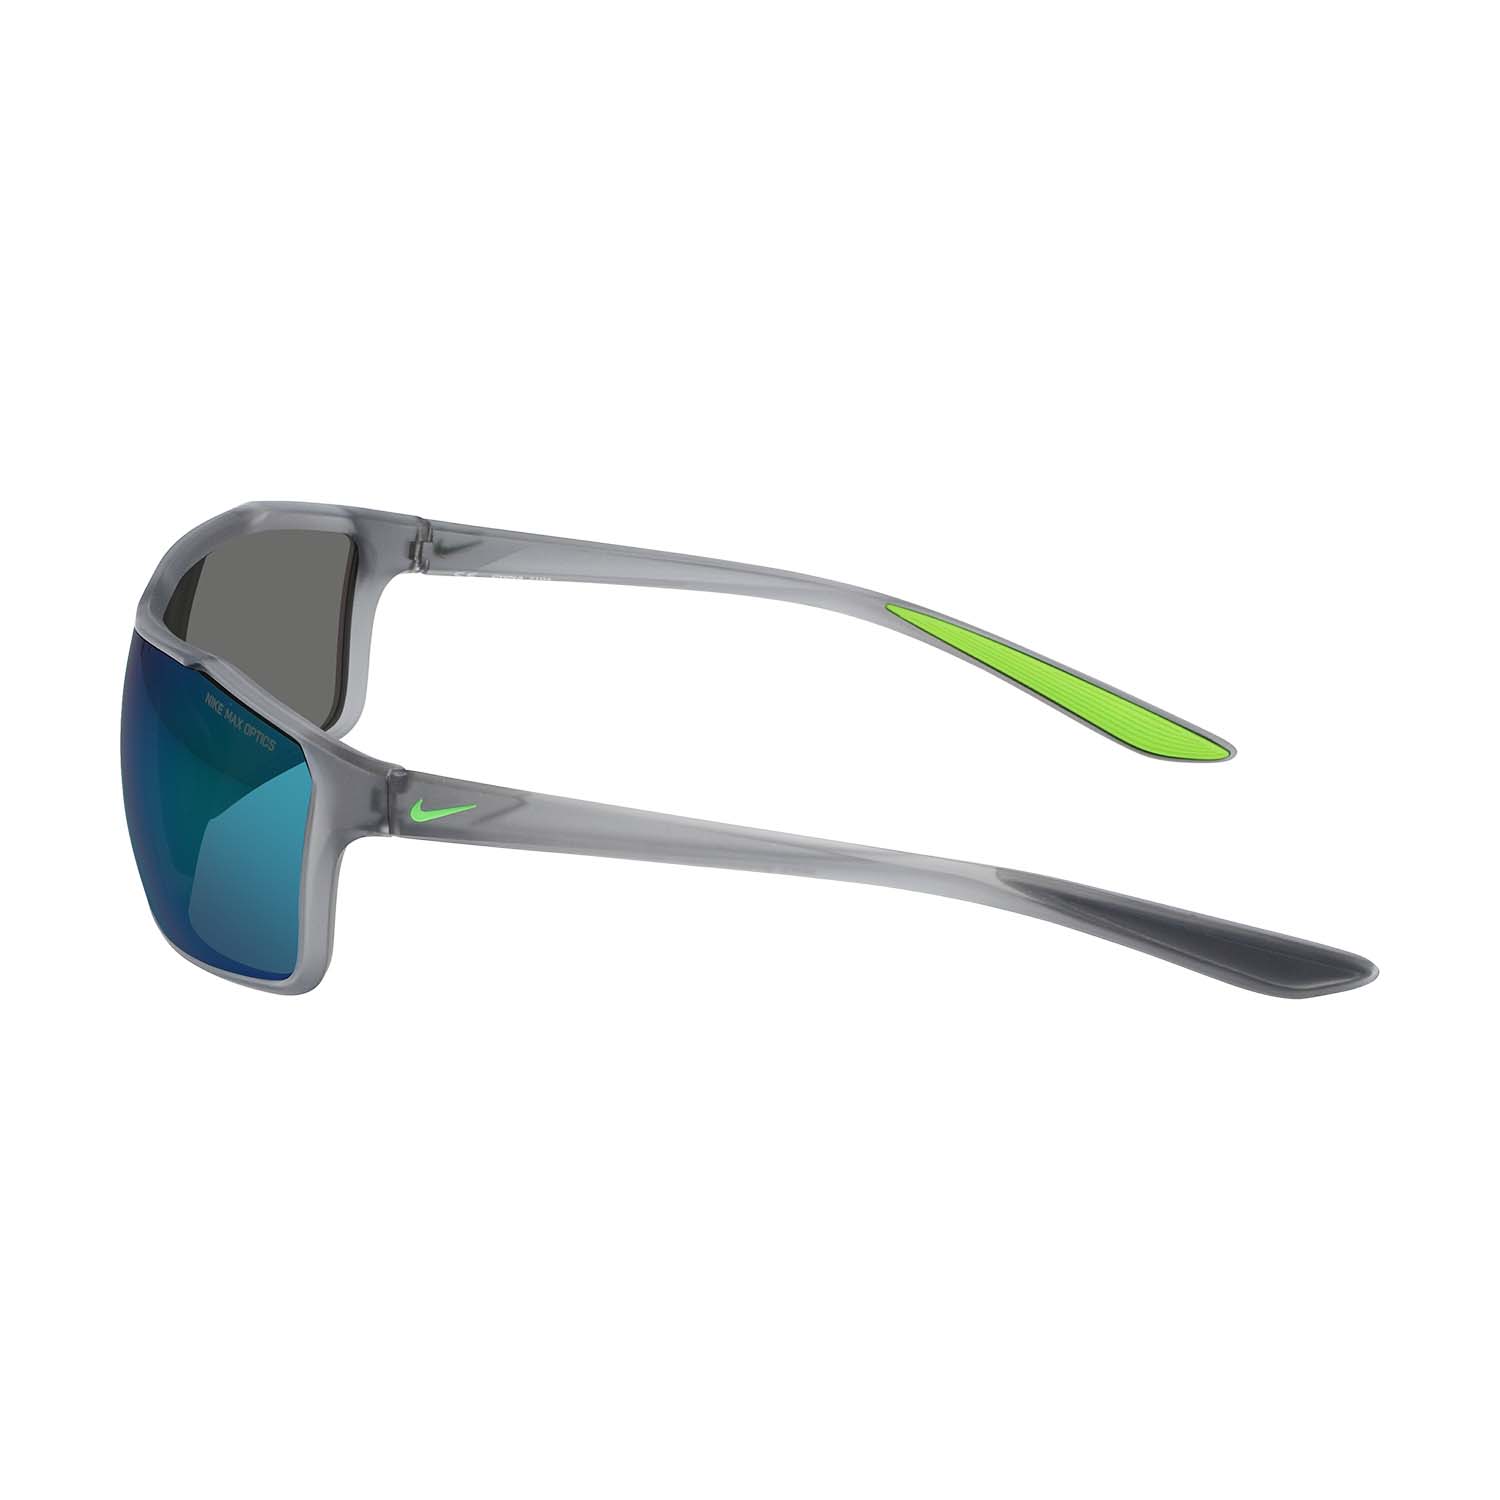 Nike Windstorm Sunglasses - Matte Dark Grey/Green Mirror